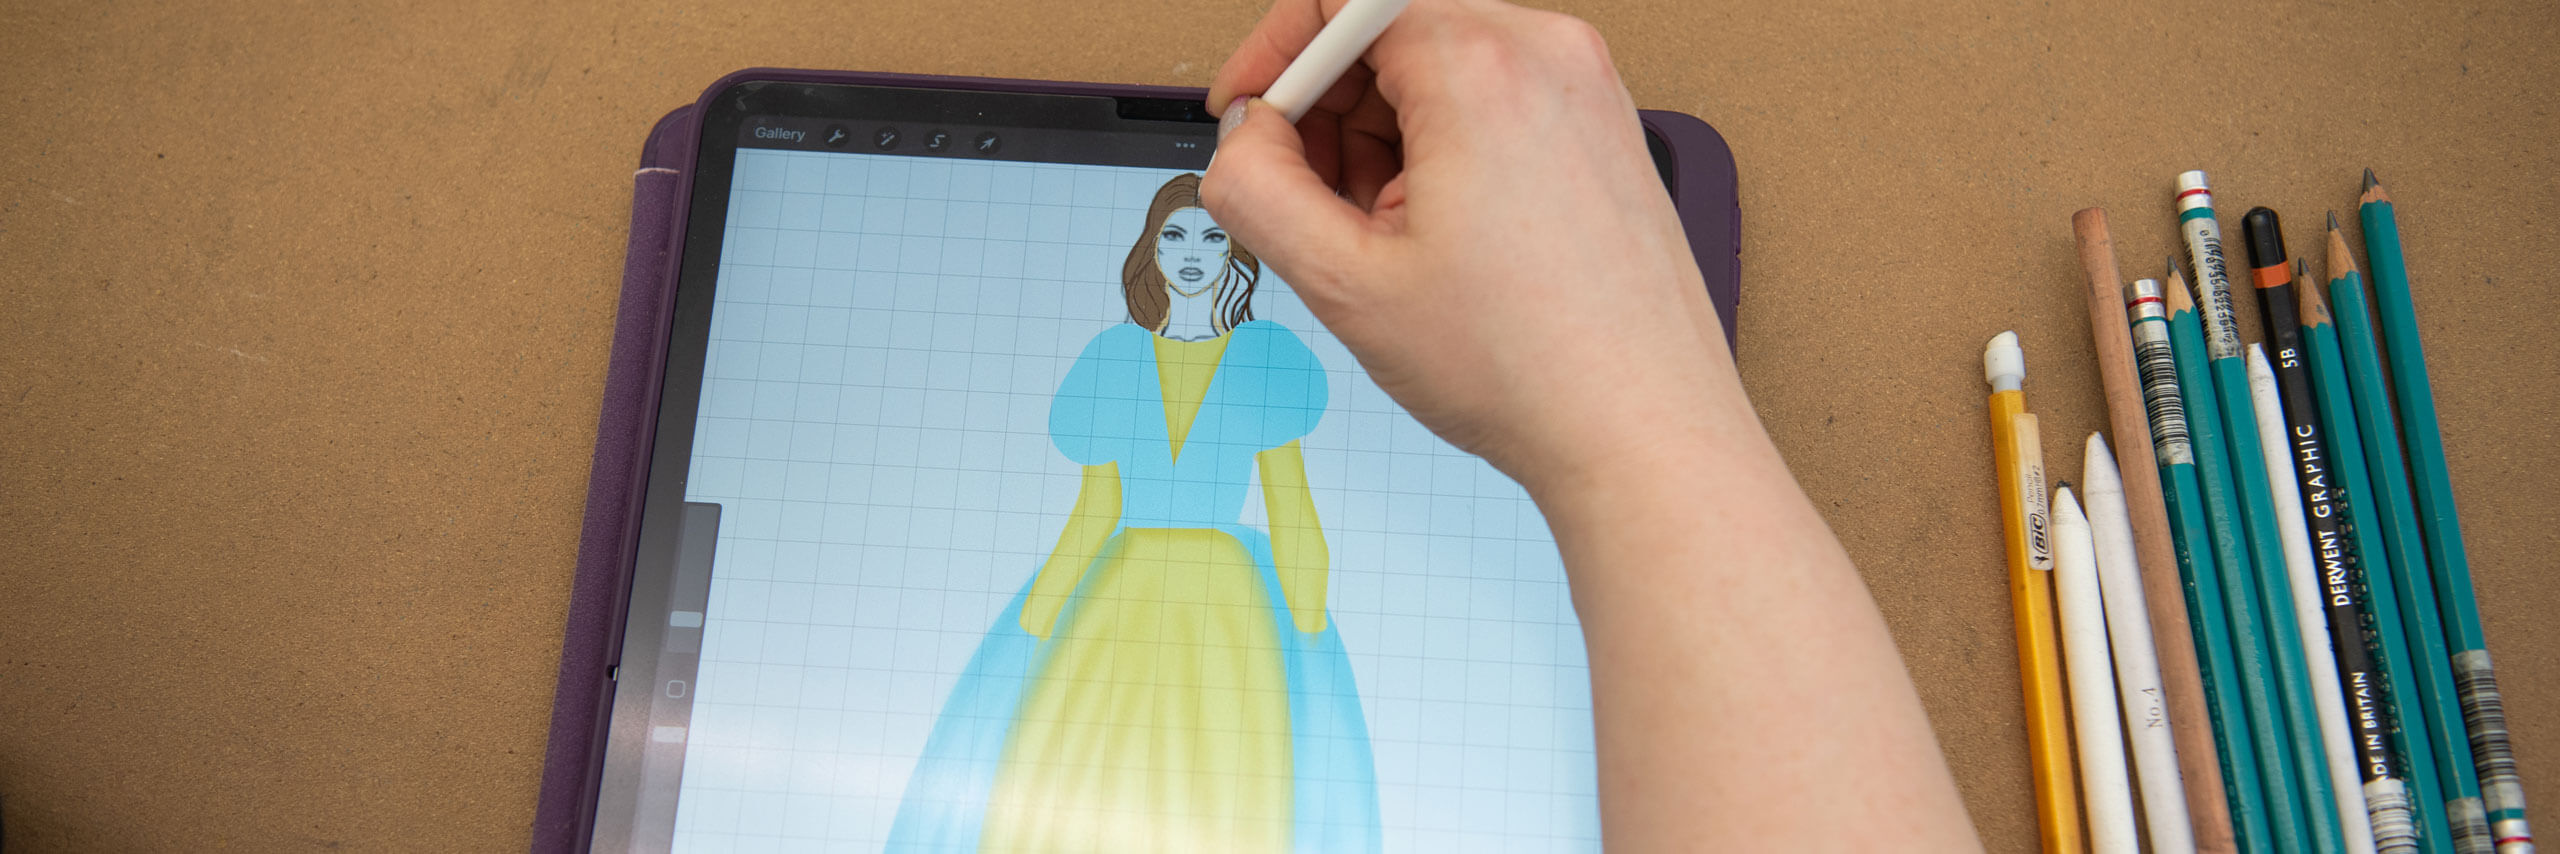 Graduate costume designer sketches a costume on her tablet.